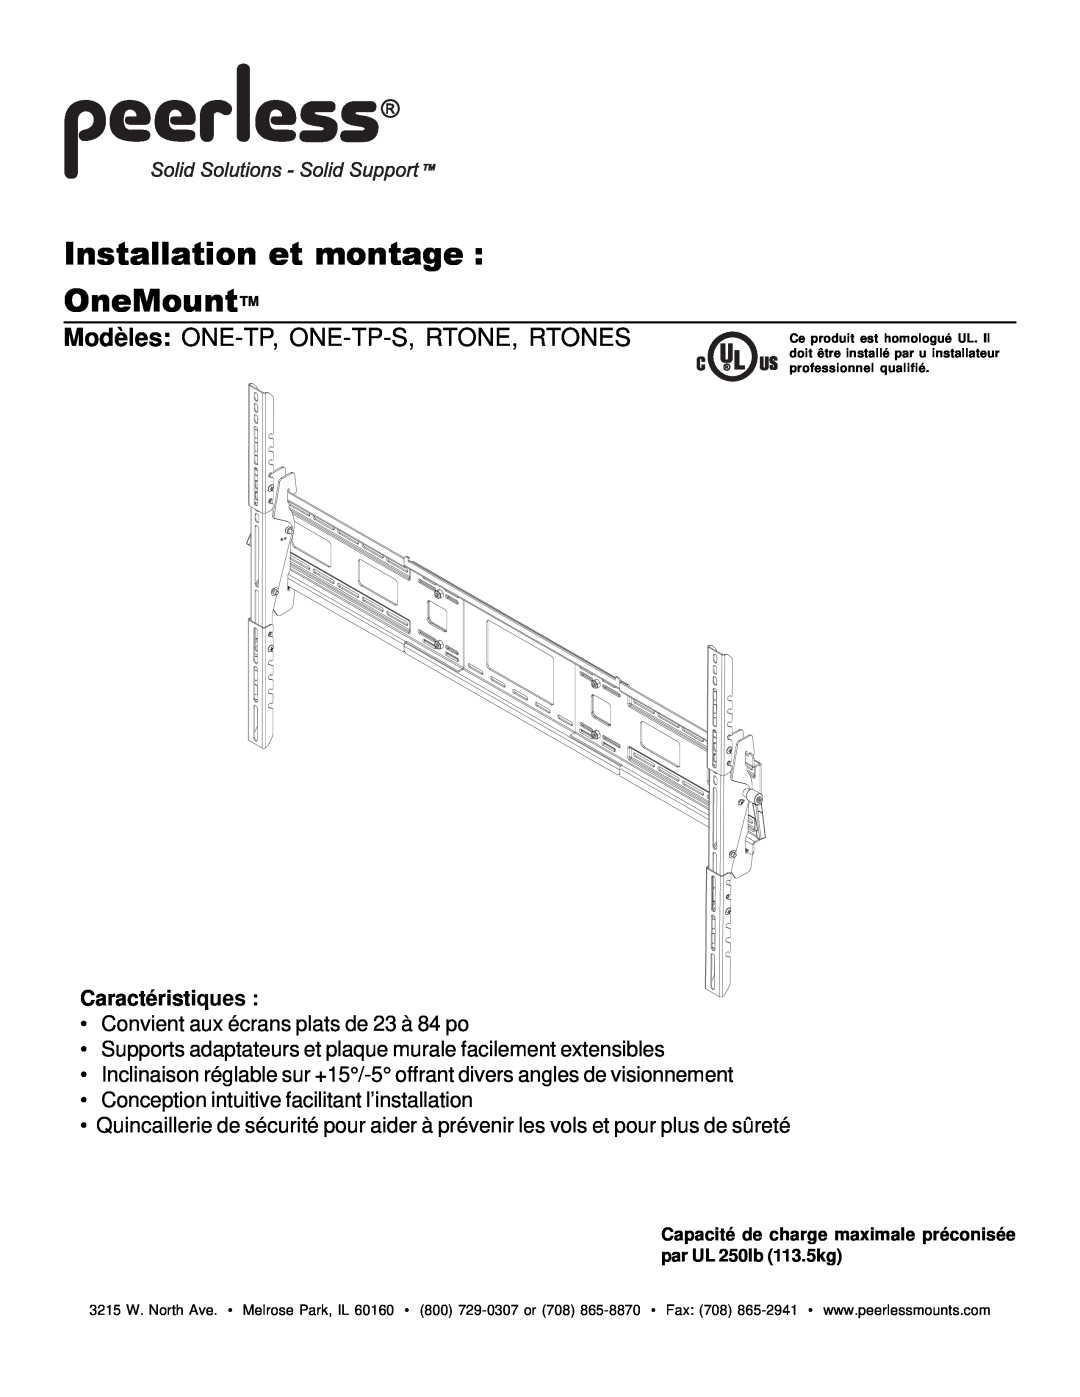 Peerless Industries manual Installation et montage OneMount, Modèles ONE-TP, ONE-TP-S,RTONE, RTONES 